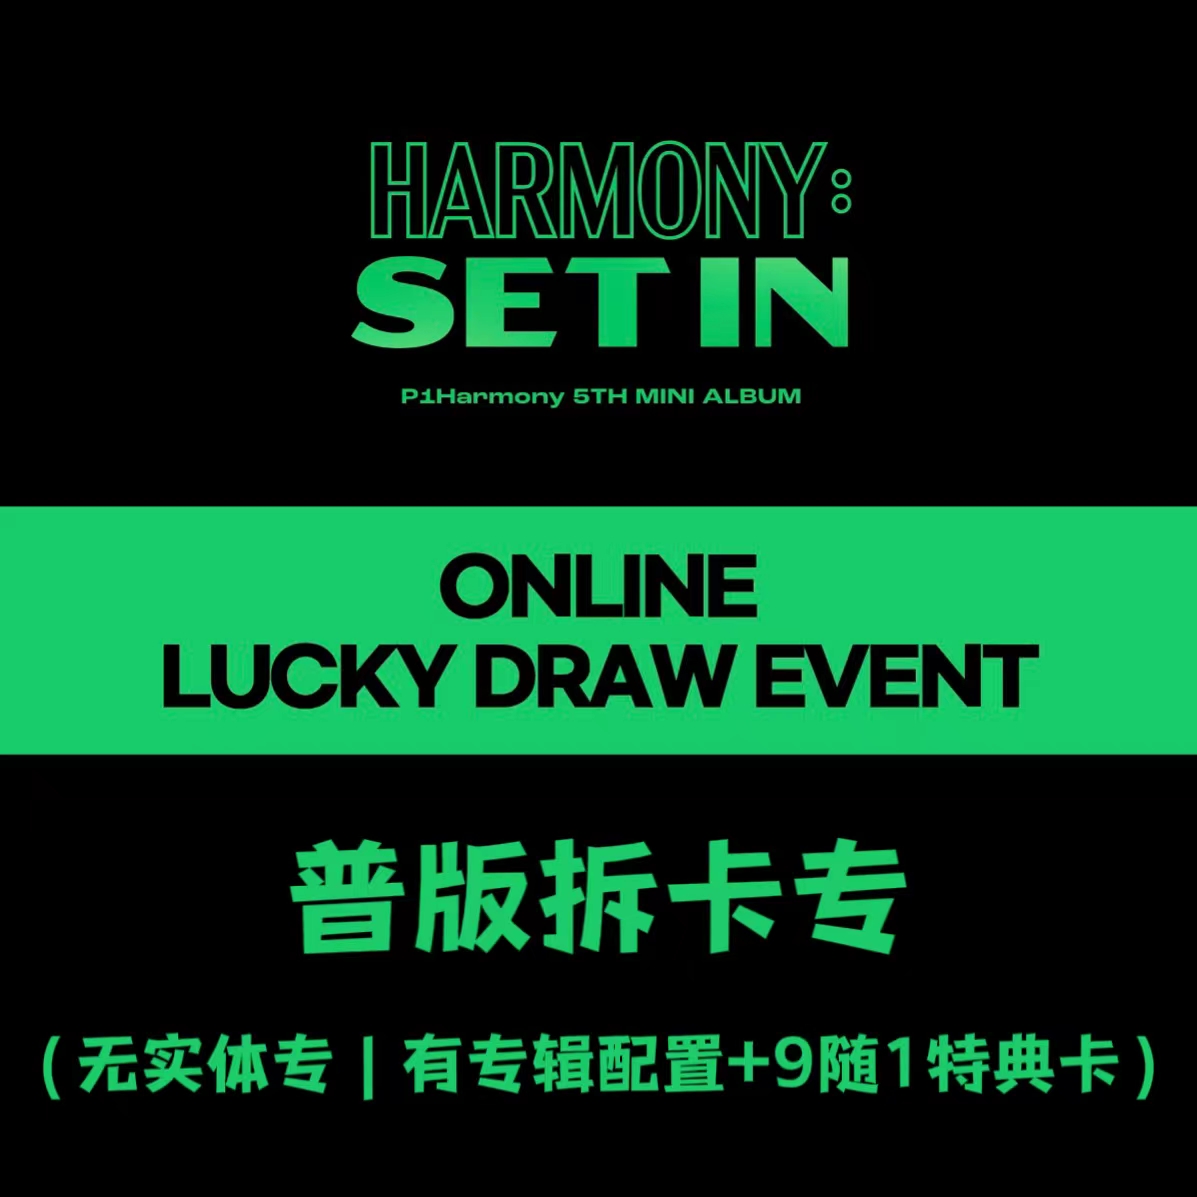 [拆卡专][Online Lucky Draw Event] P1Harmony - 5th Mini Album [HARMONY : SET IN]_Wildness_尹起昊DareU